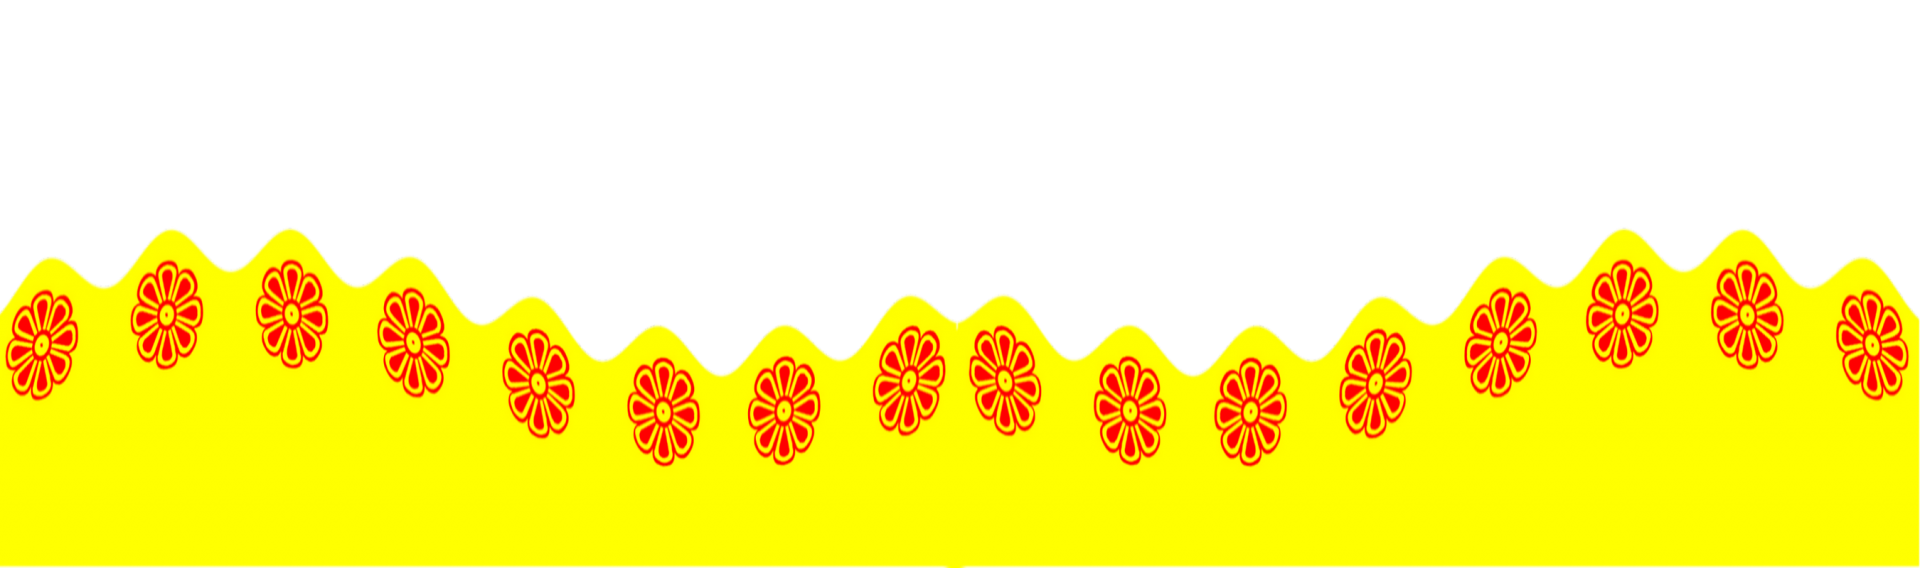 Yellow Border 013